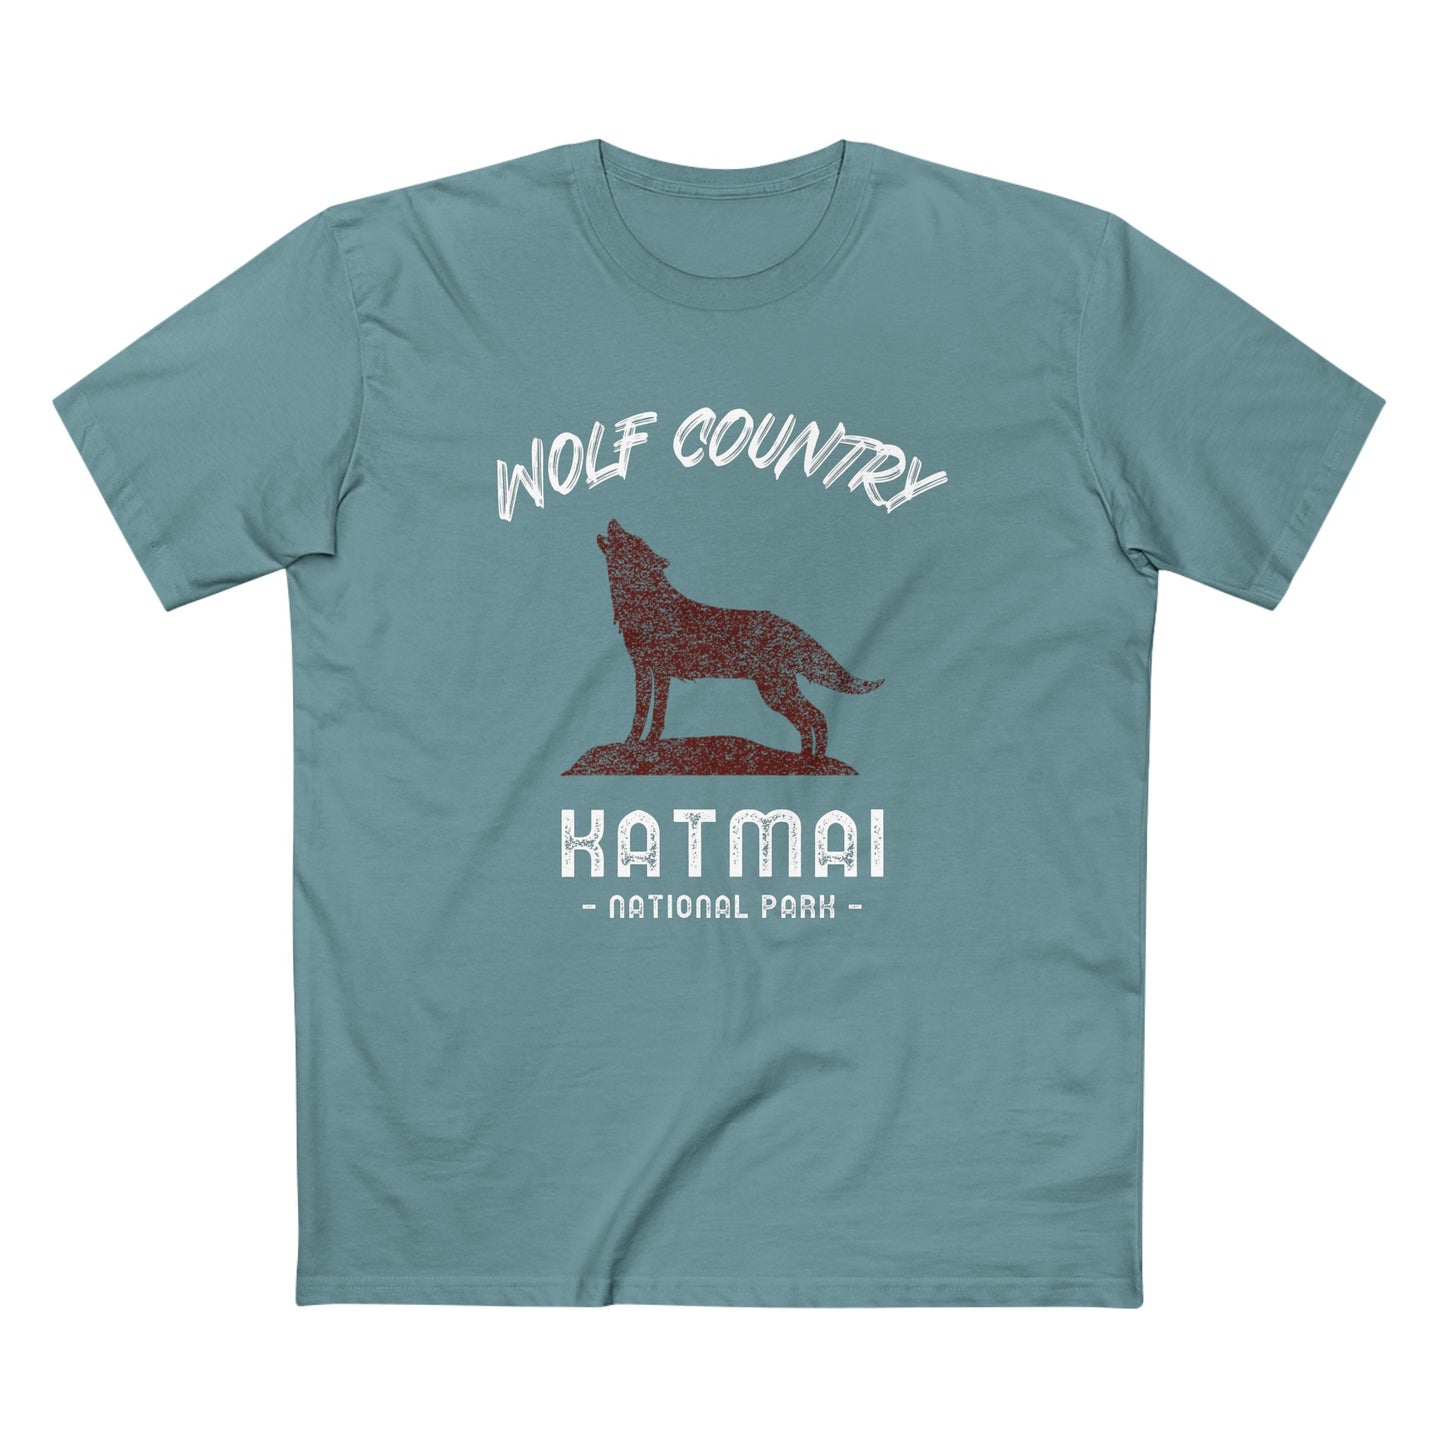 Katmai National Park T-Shirt - Wolf Country